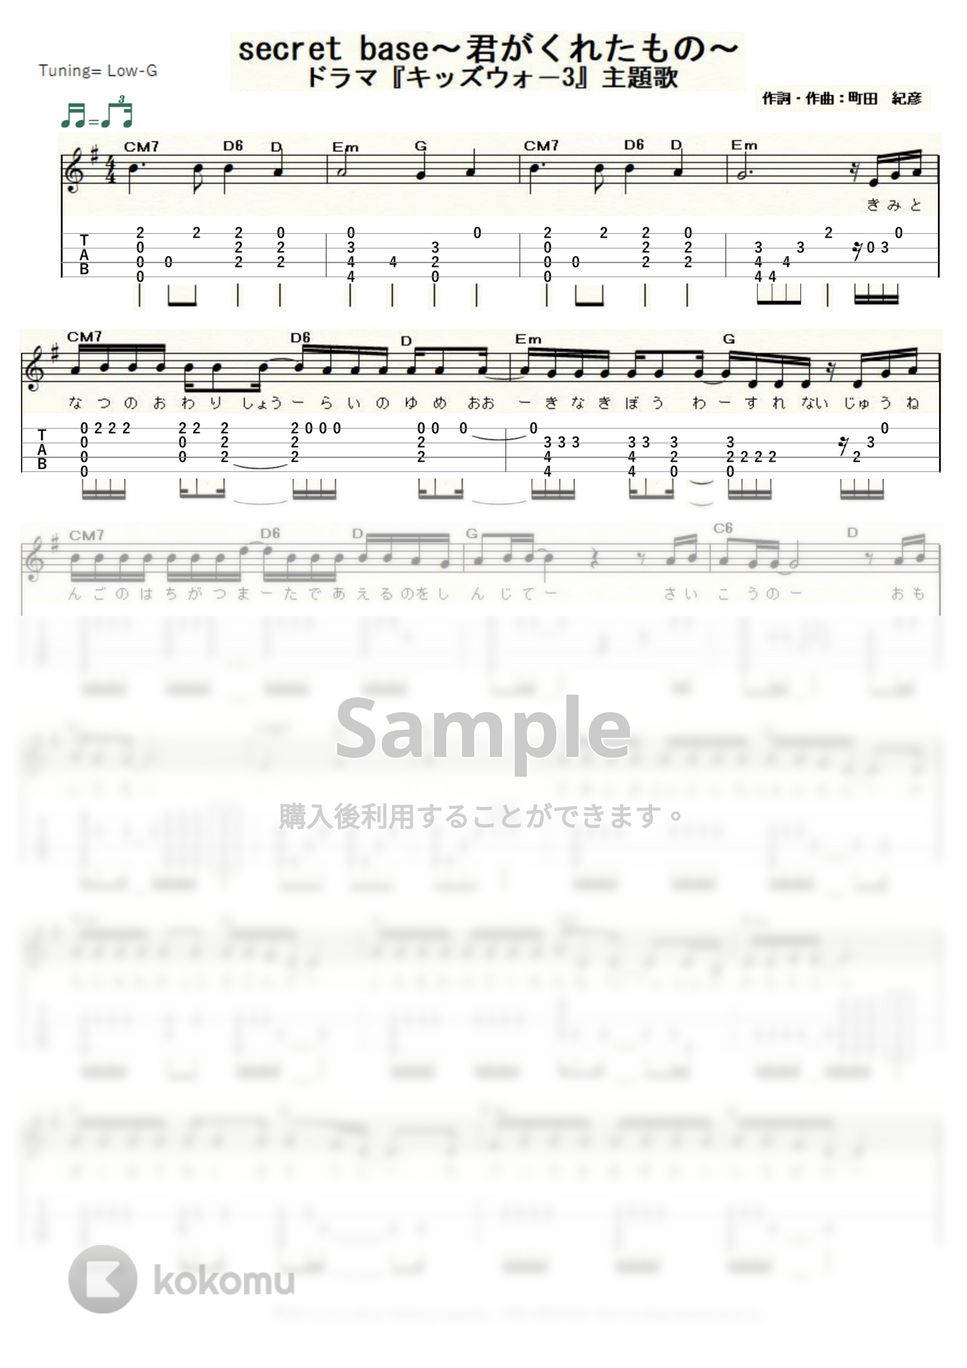 ZONE - secret base～君がくれたもの～ (ｳｸﾚﾚｿﾛ / Low-G / 中級) by ukulelepapa